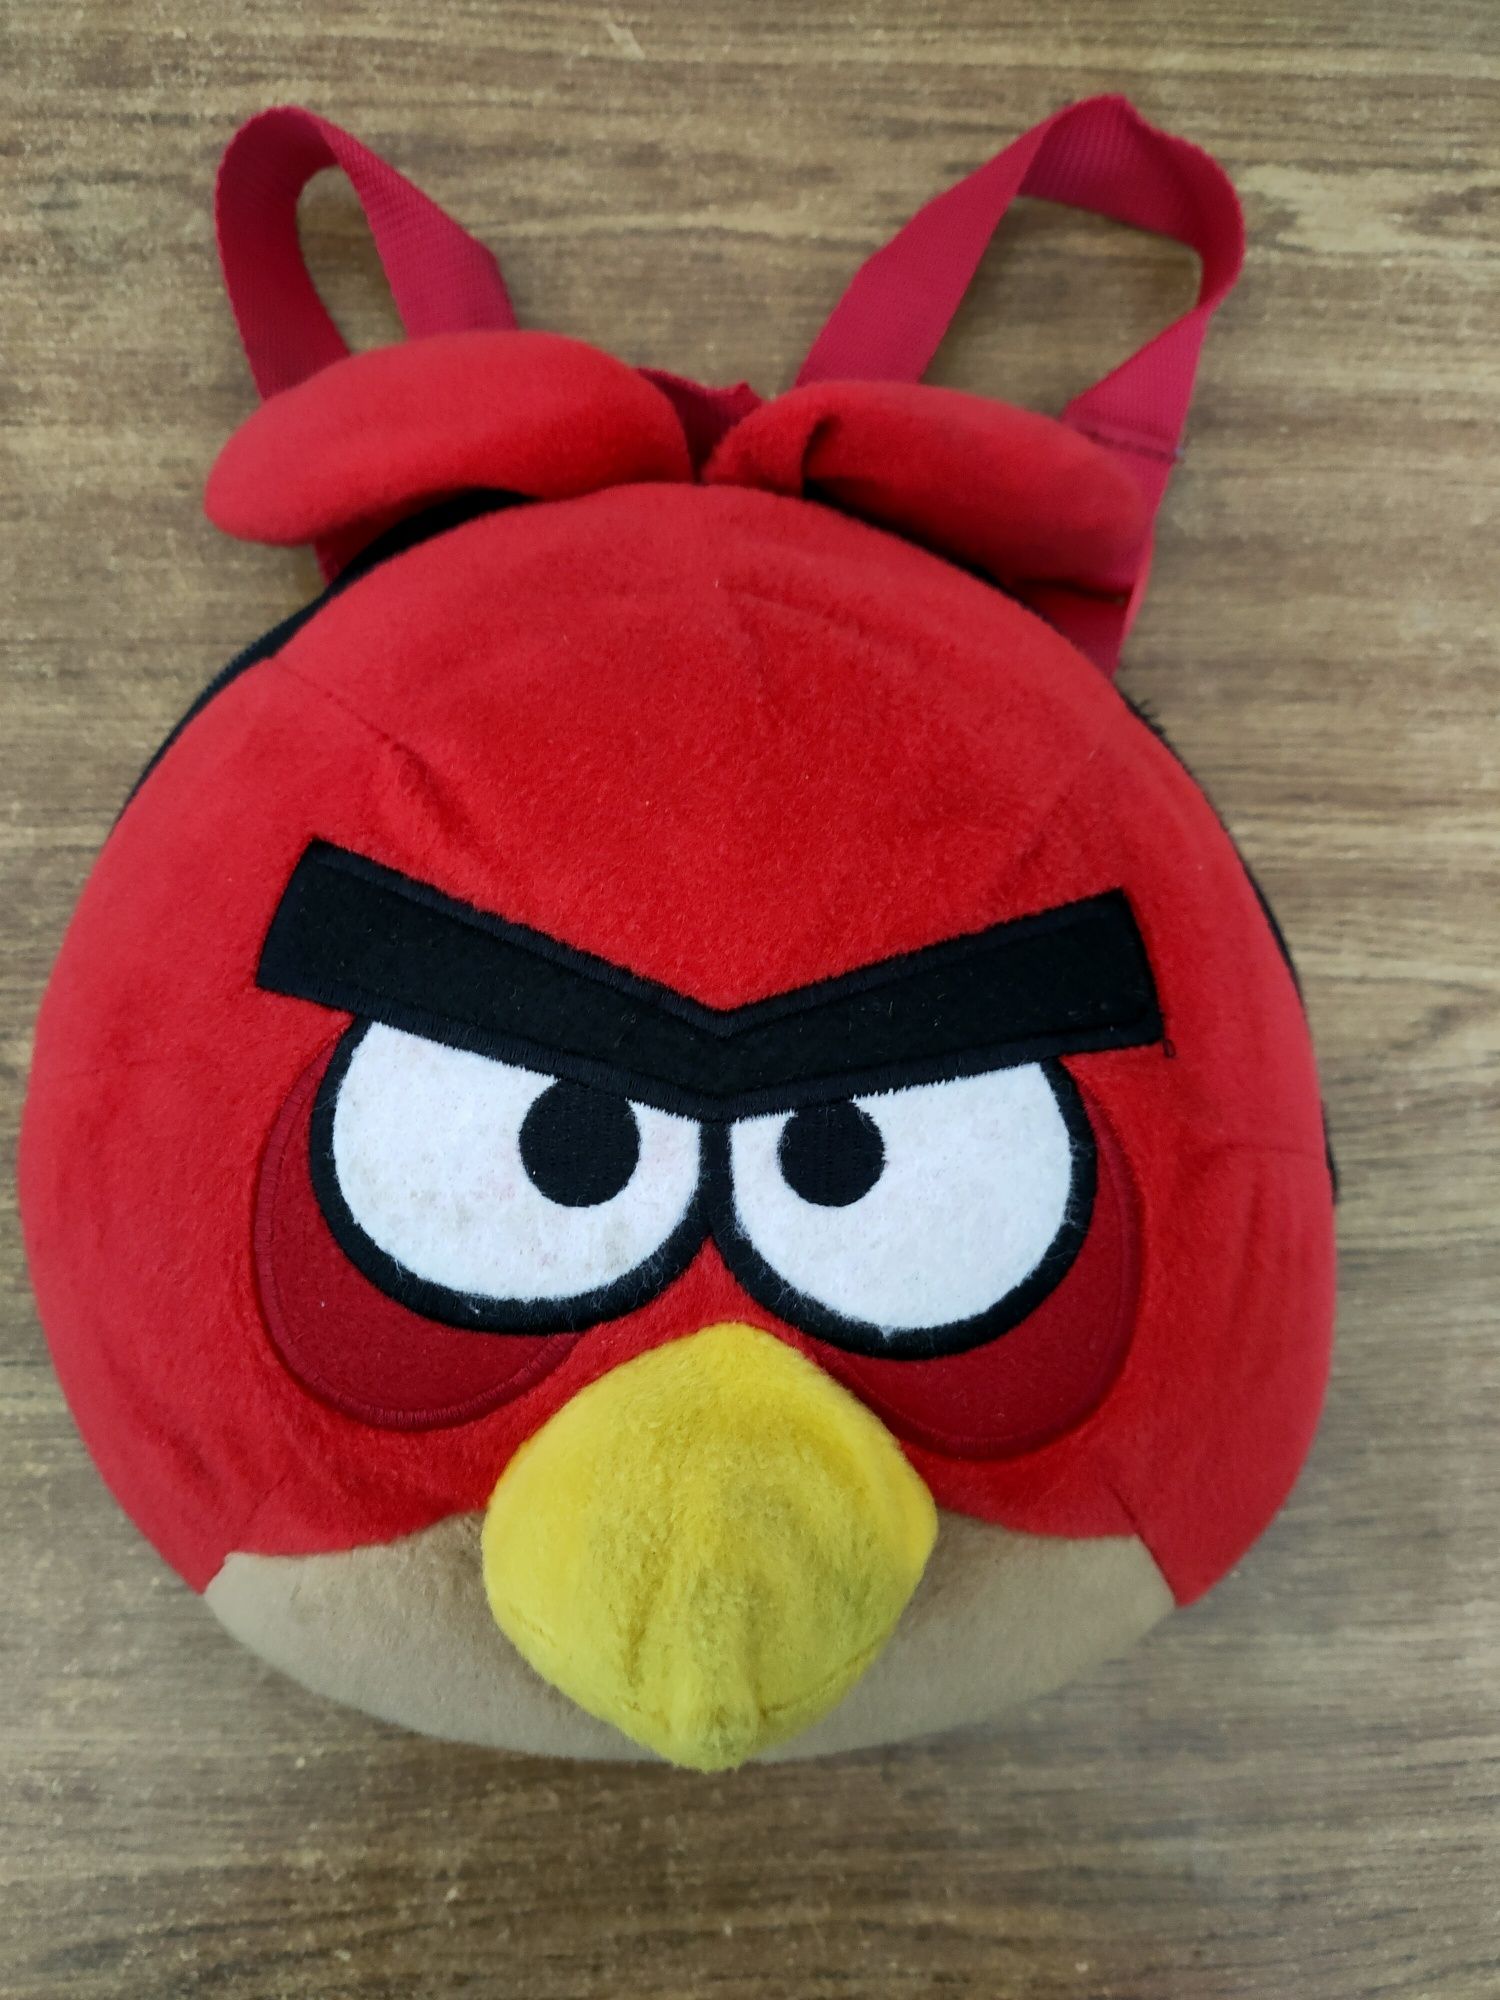 Plecak Angry Birds